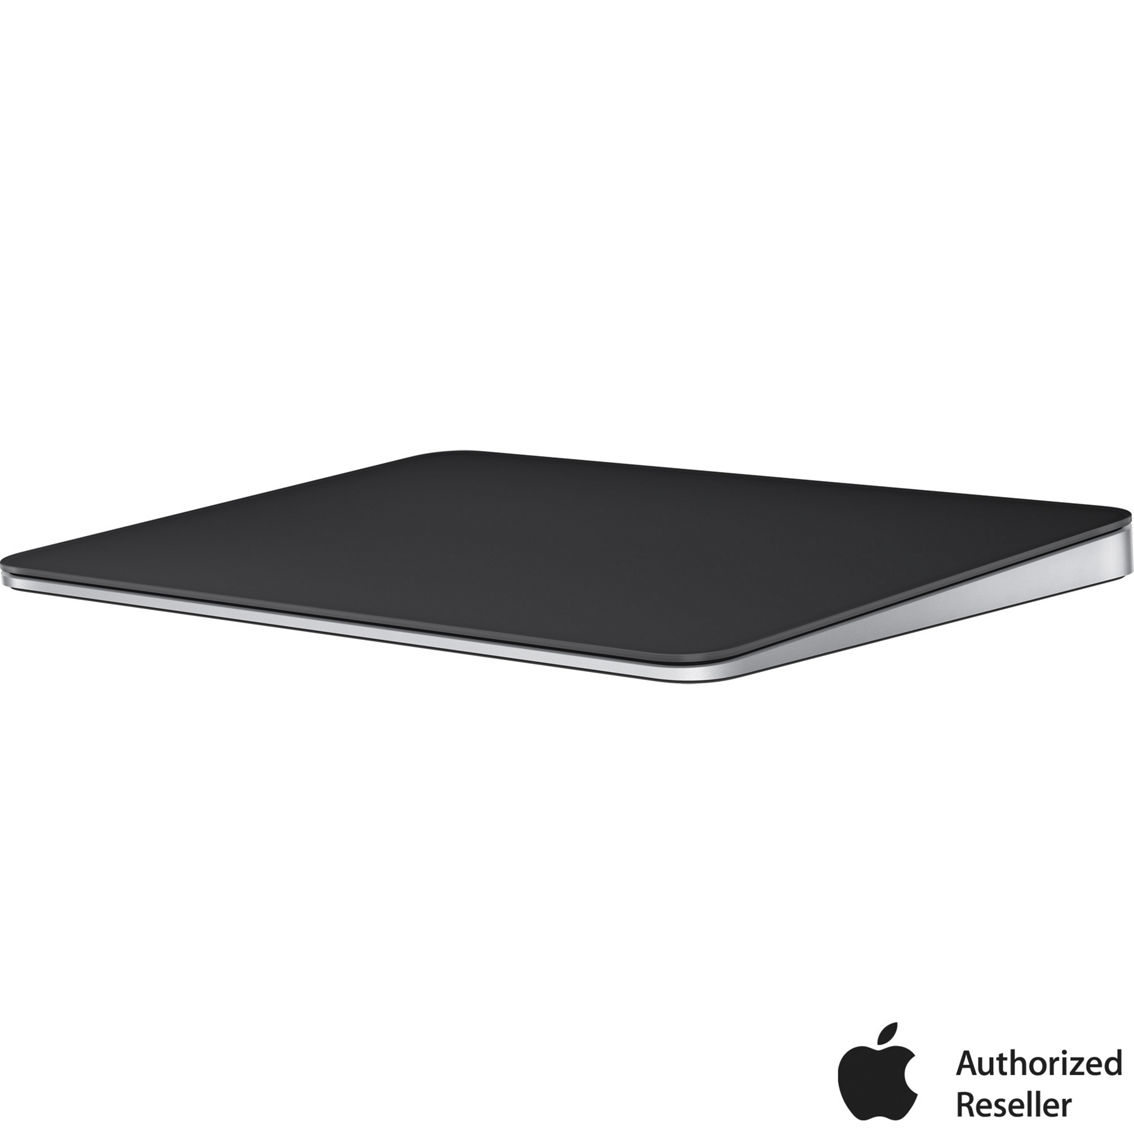 Apple Magic Trackpad Black Multi-touch Surface | Apple Mac